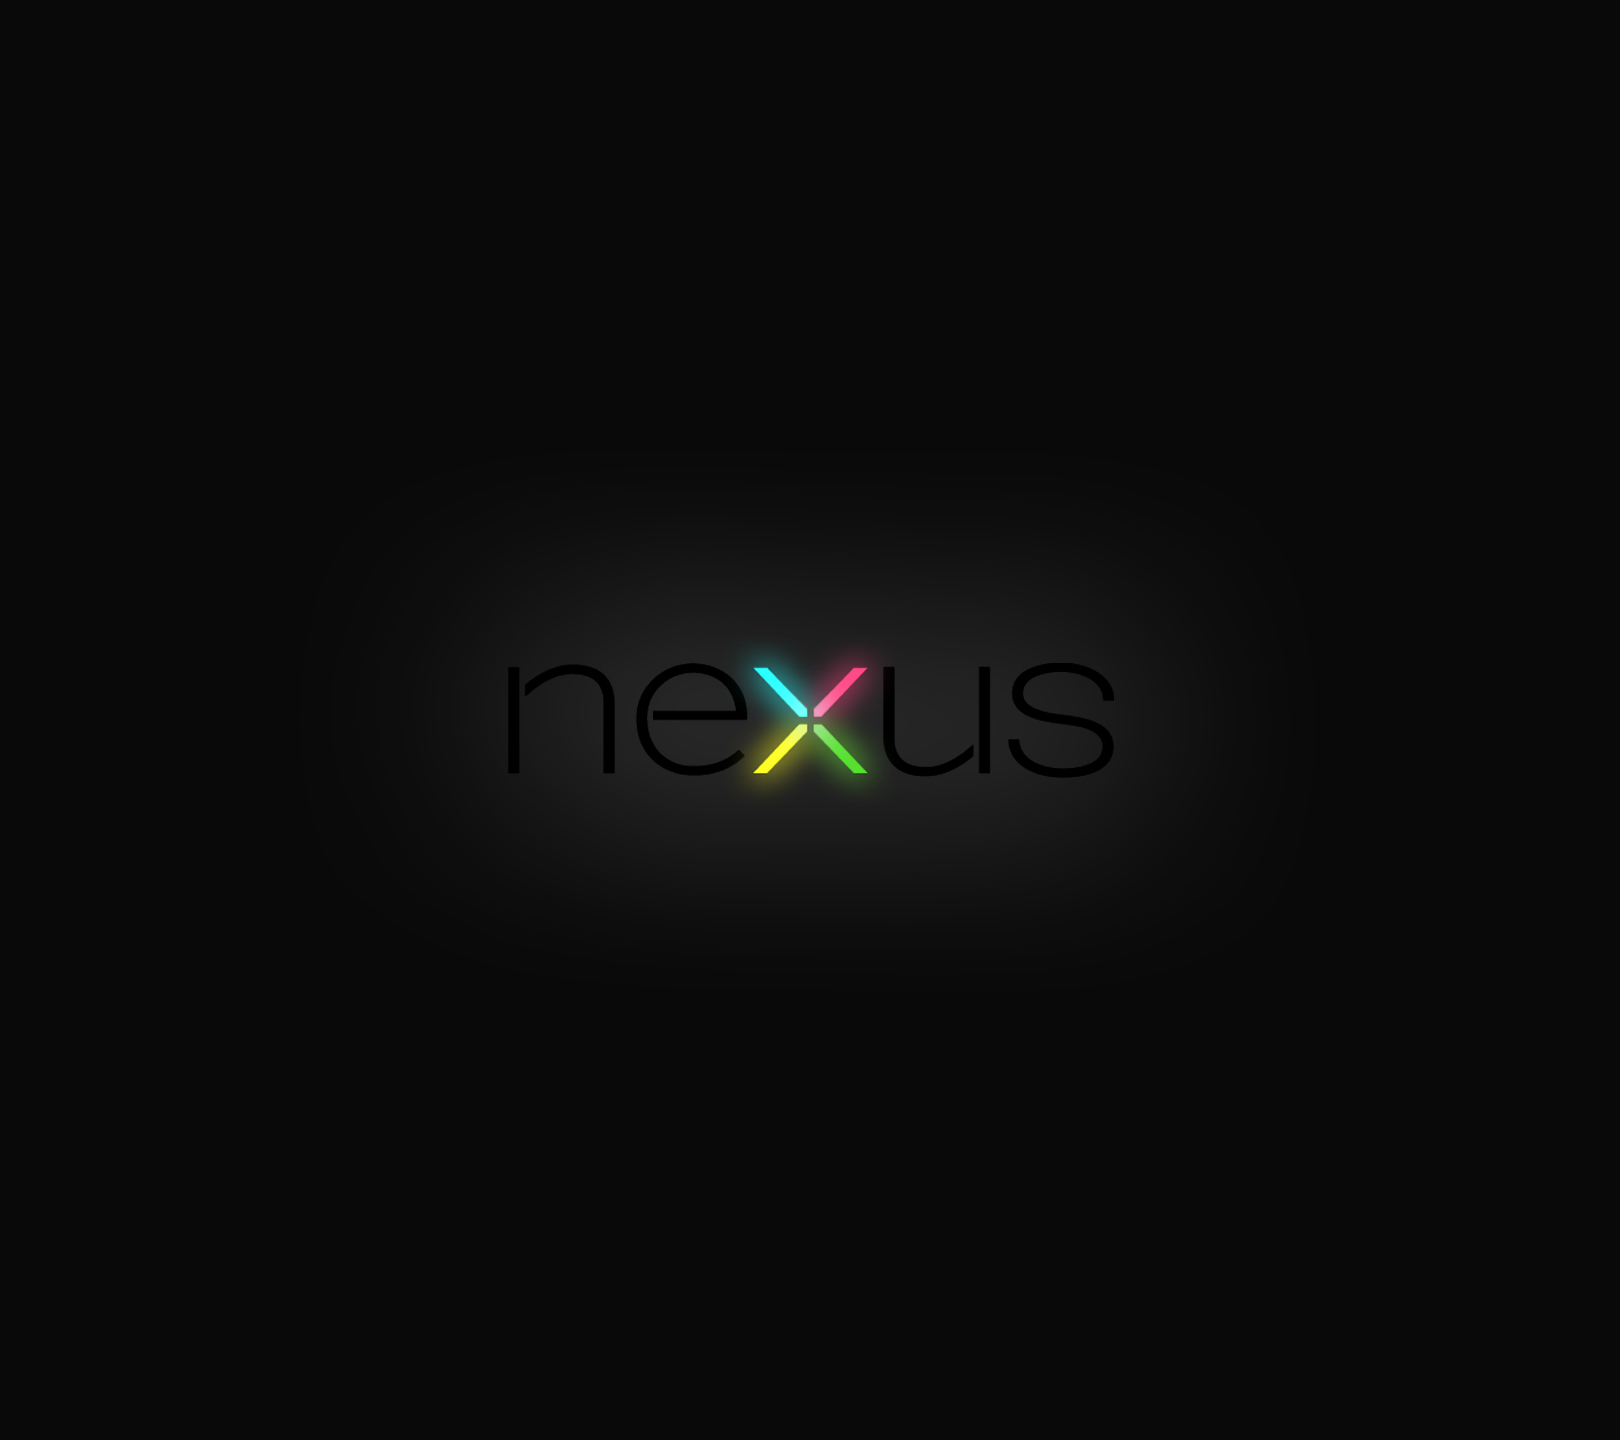 Wallpaper Pg Google Nexus Xda Forums